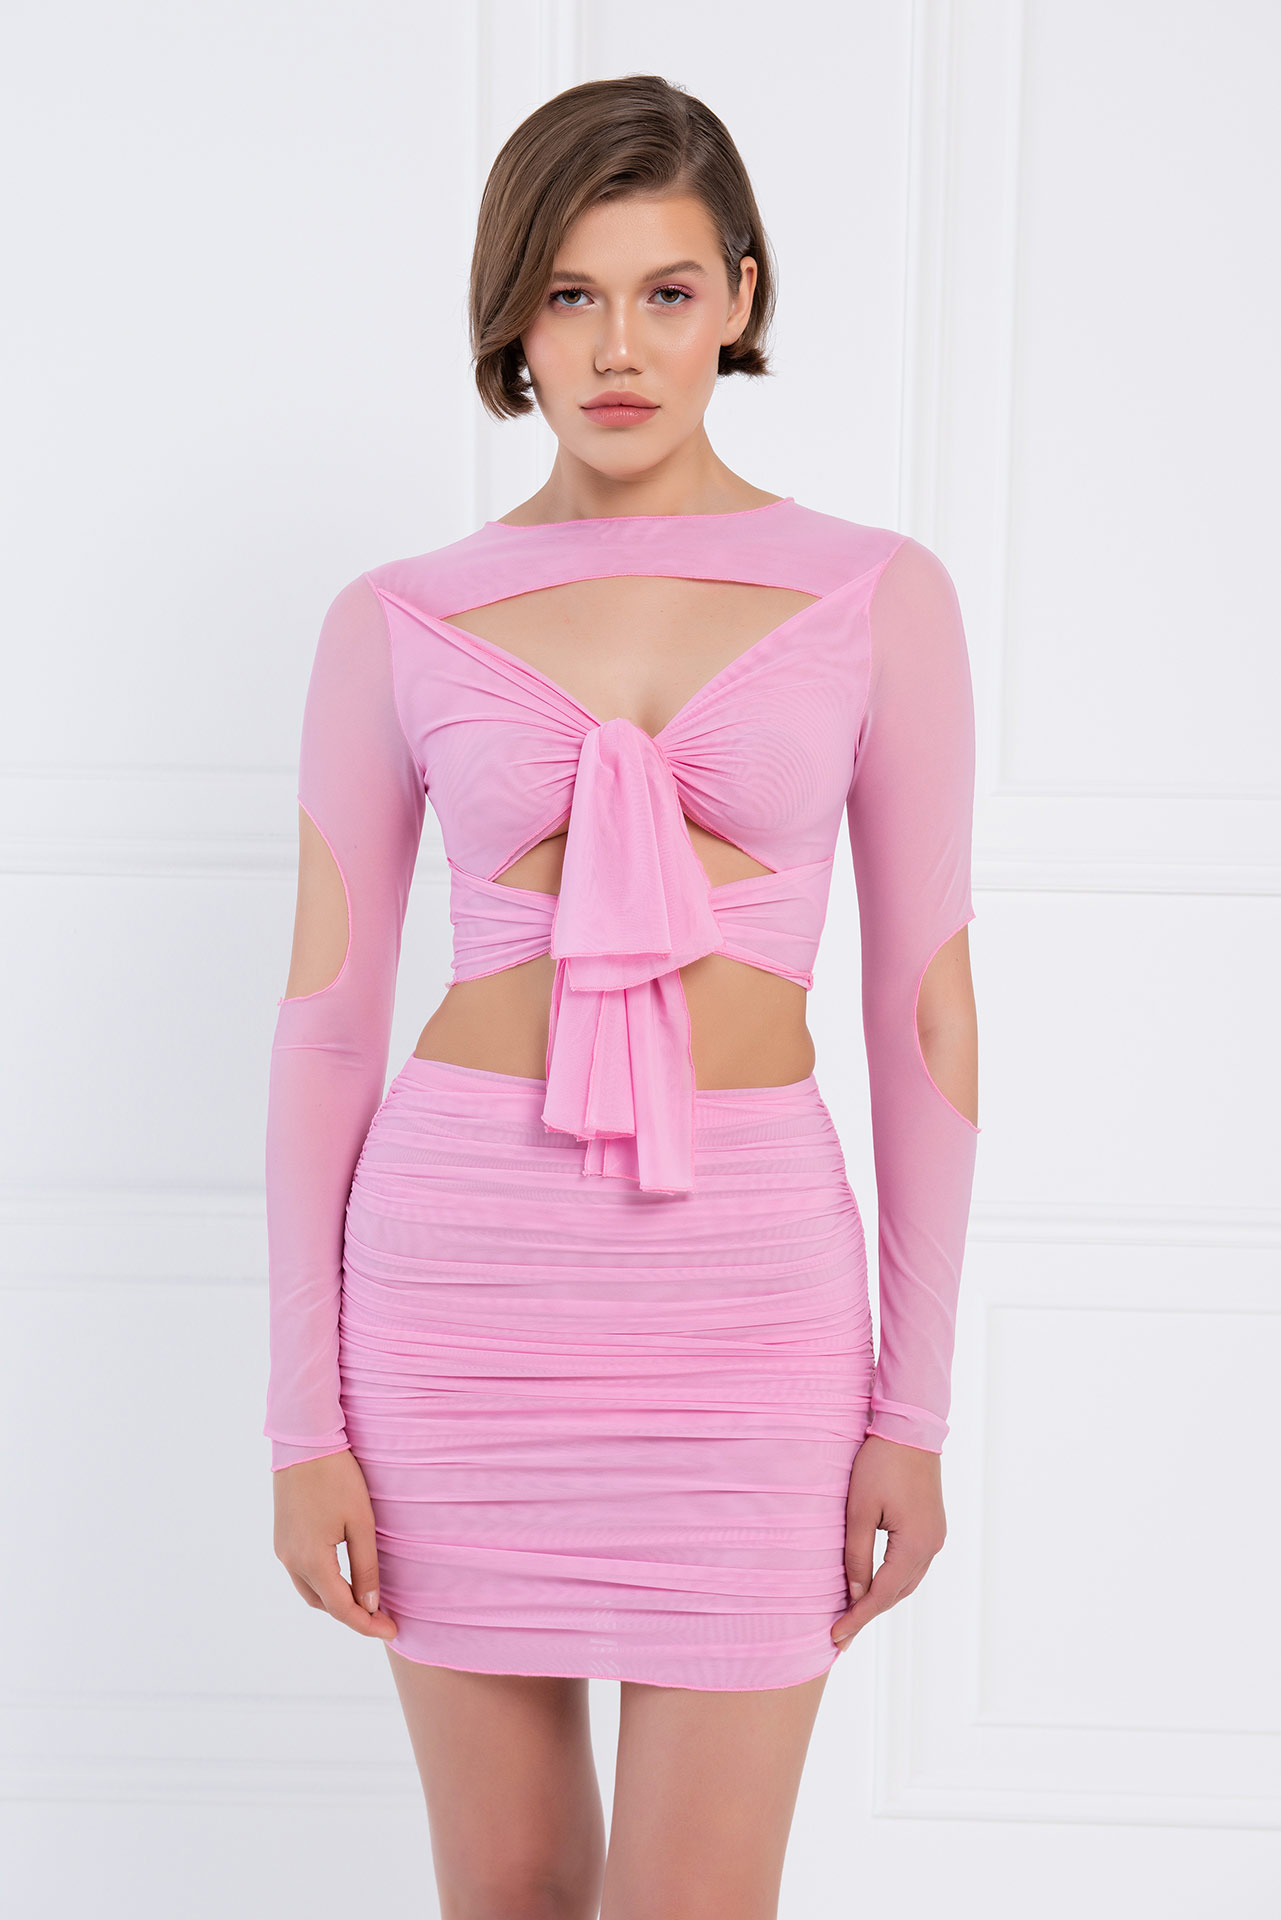 Wholesale Self-Tie New Pink Mesh Top & Skirt Set